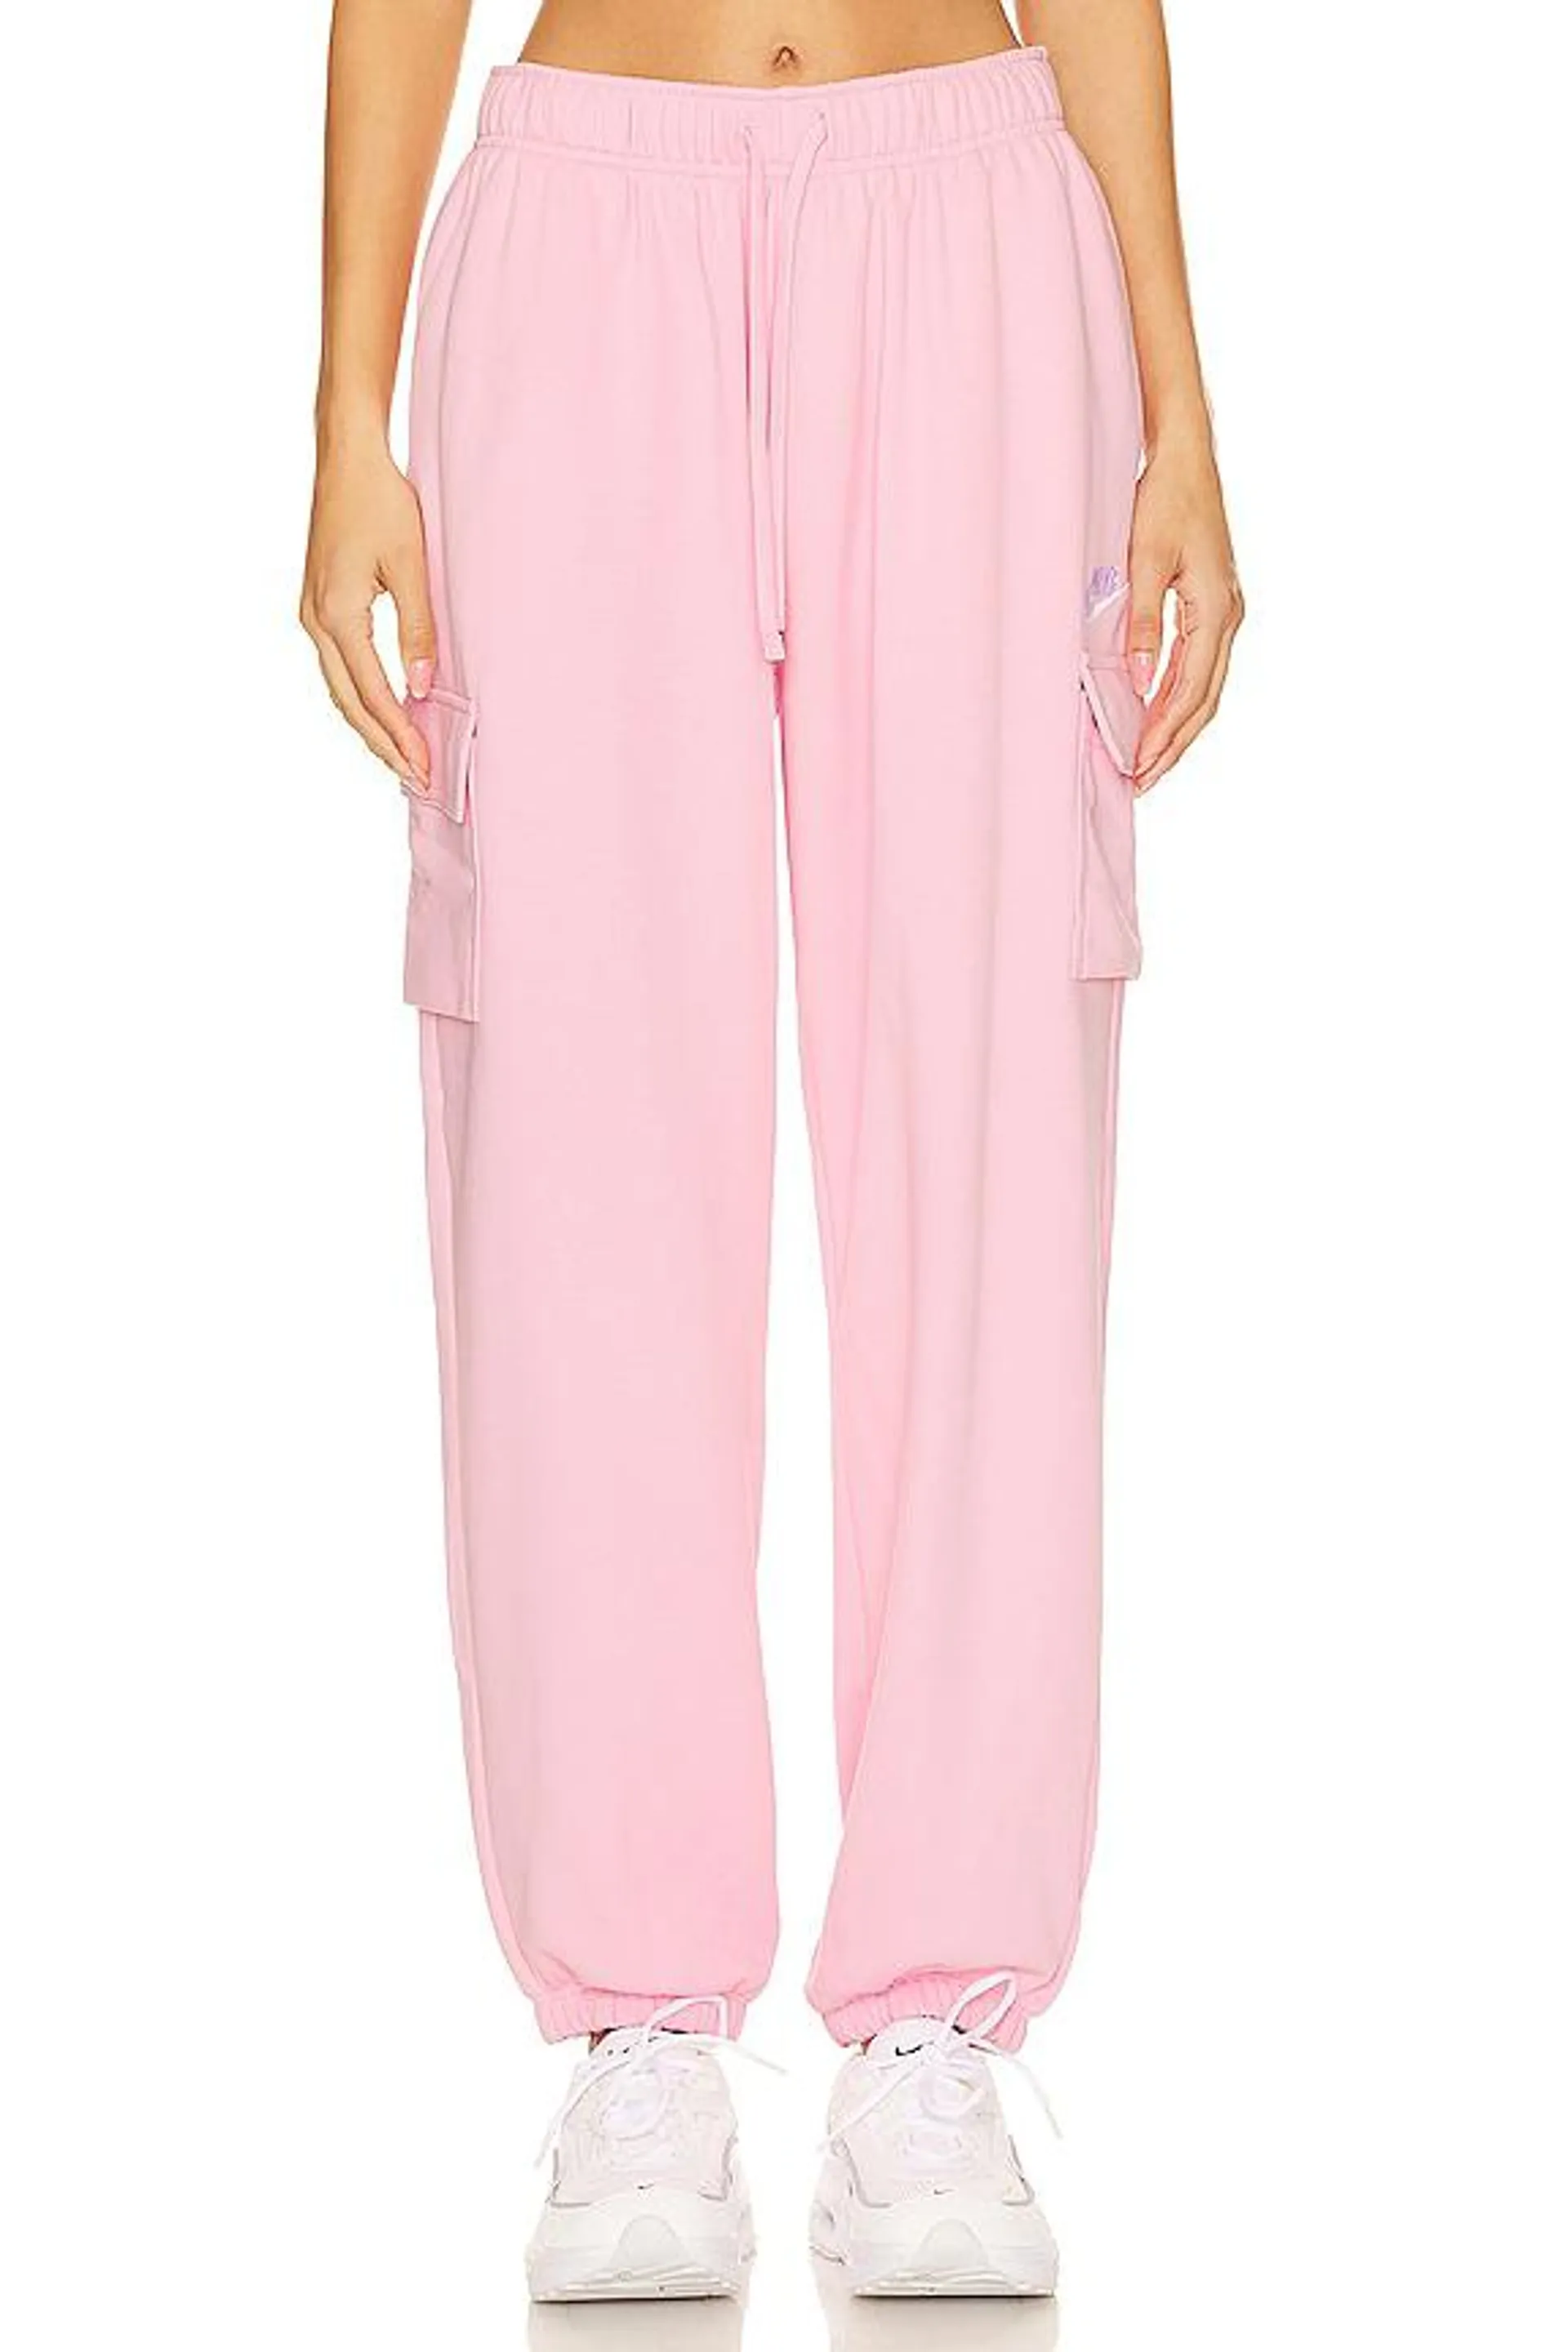 favorite Nike Club Fleece Cargo Sweatpants in Medium Soft Pink & White